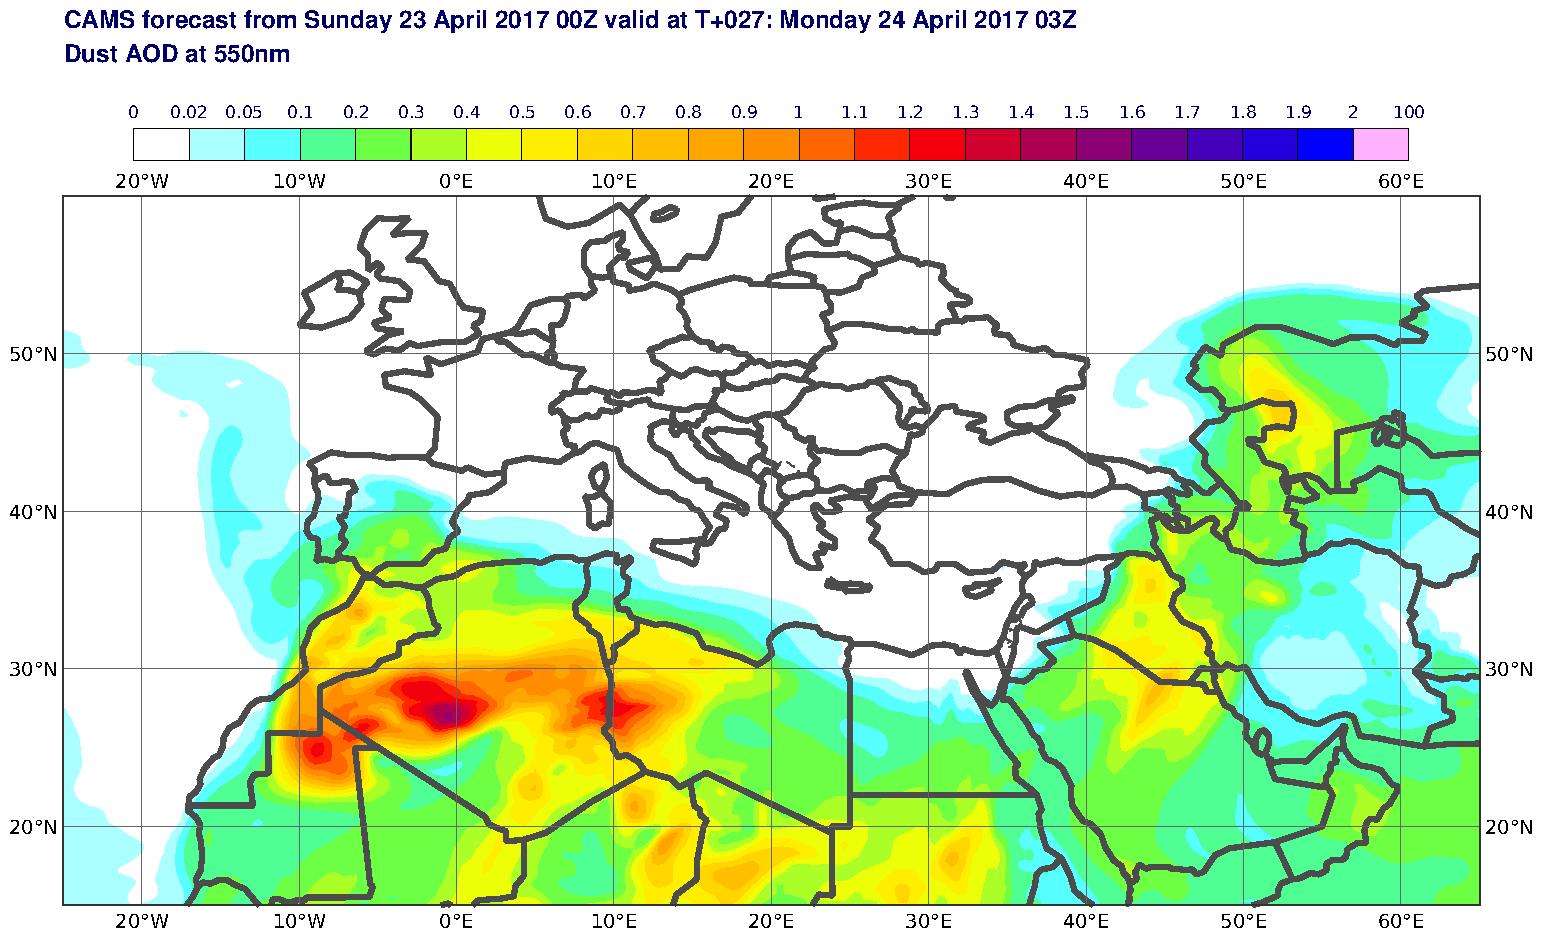 Dust AOD at 550nm valid at T27 - 2017-04-24 03:00